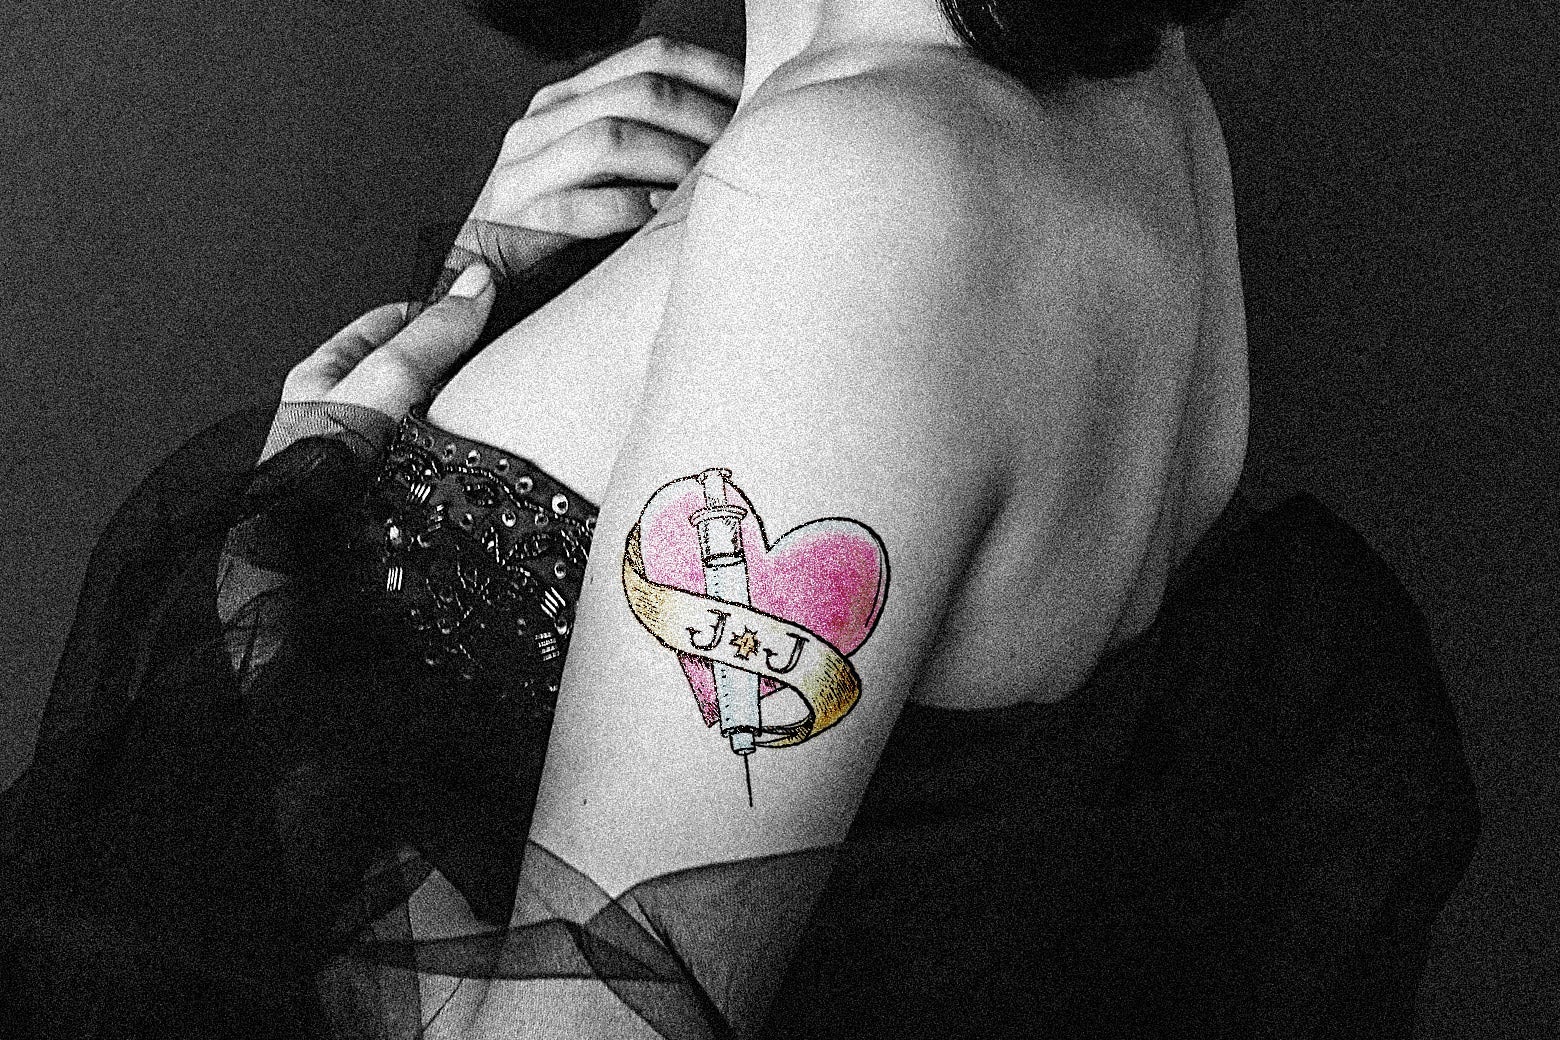 A tattoo of a heart around J & J